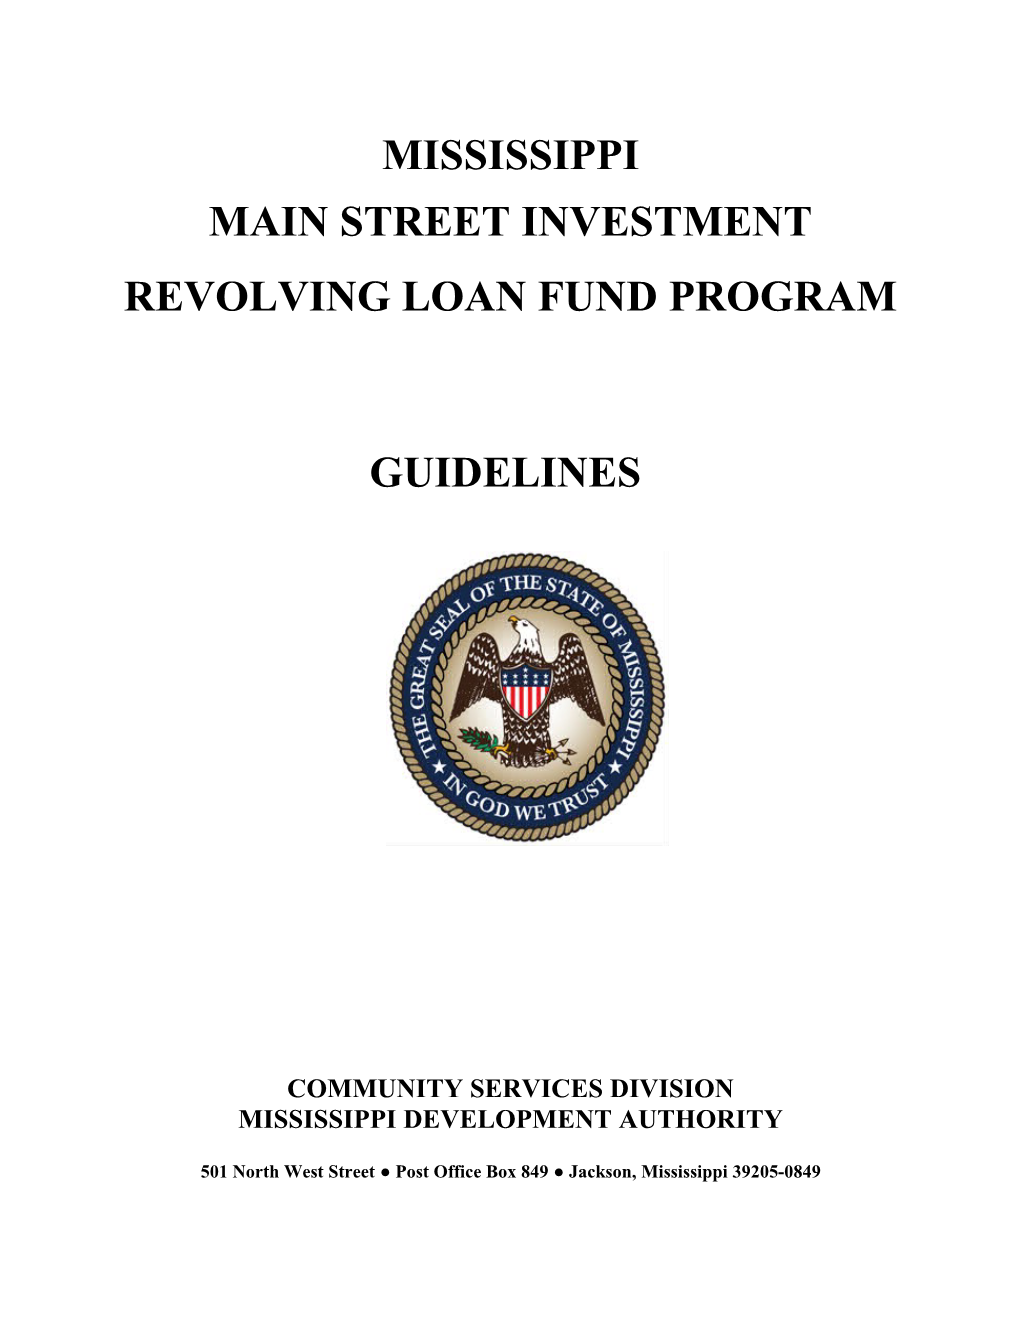 Main Street Investment Revolving Loan Fund Program